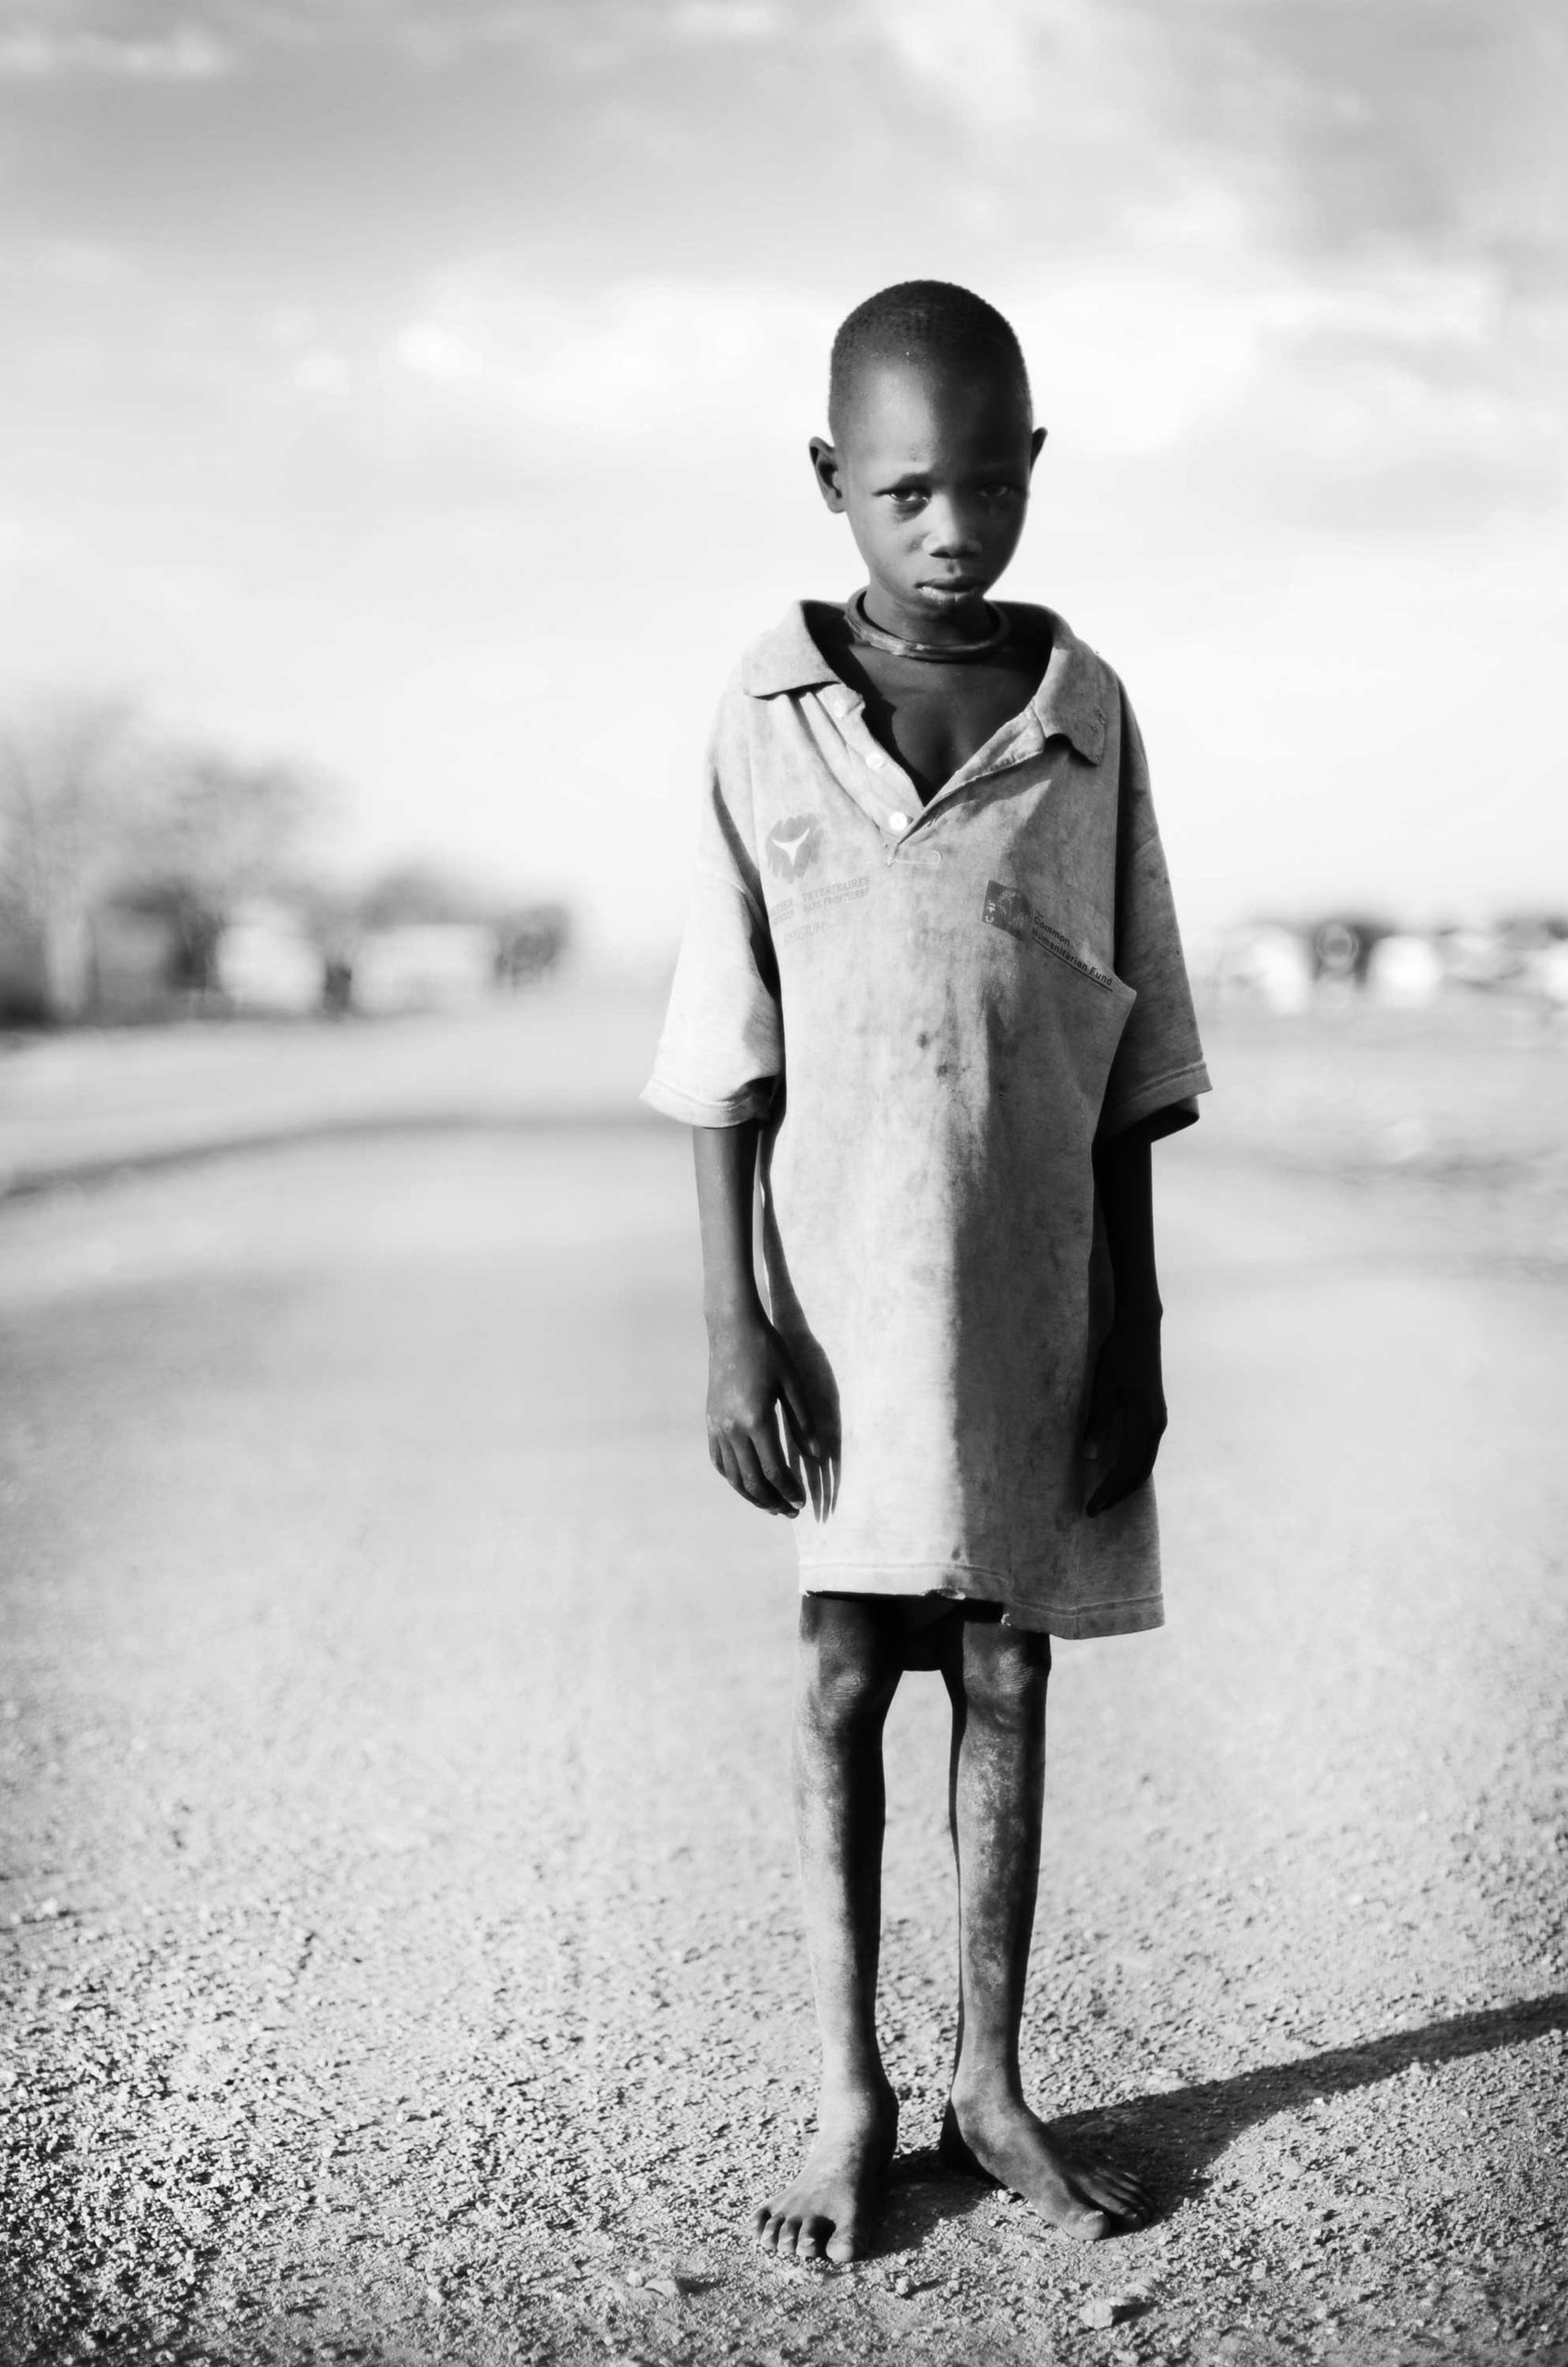 ugo-borga-south-soudan-portraits-2016-black-and-white-04